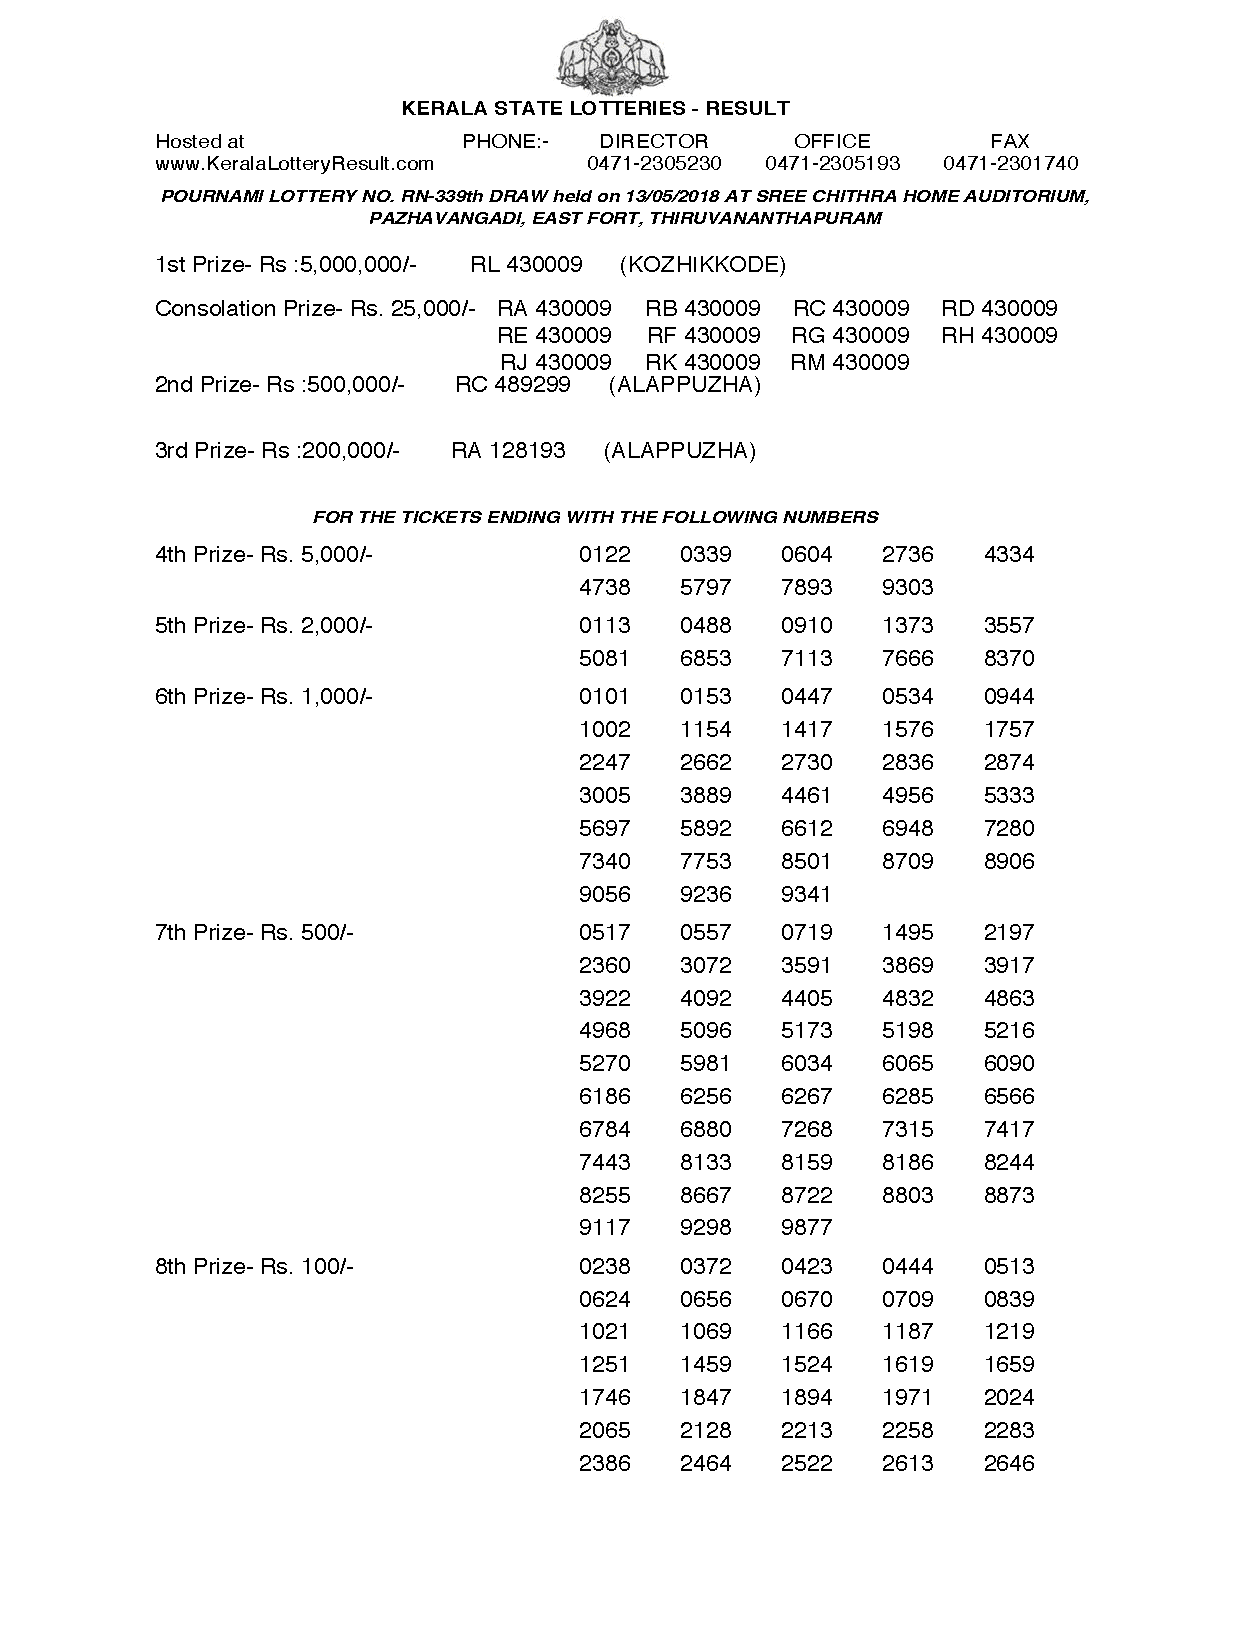 Pournami RN339 Kerala Lottery Results Screenshot: Page 1